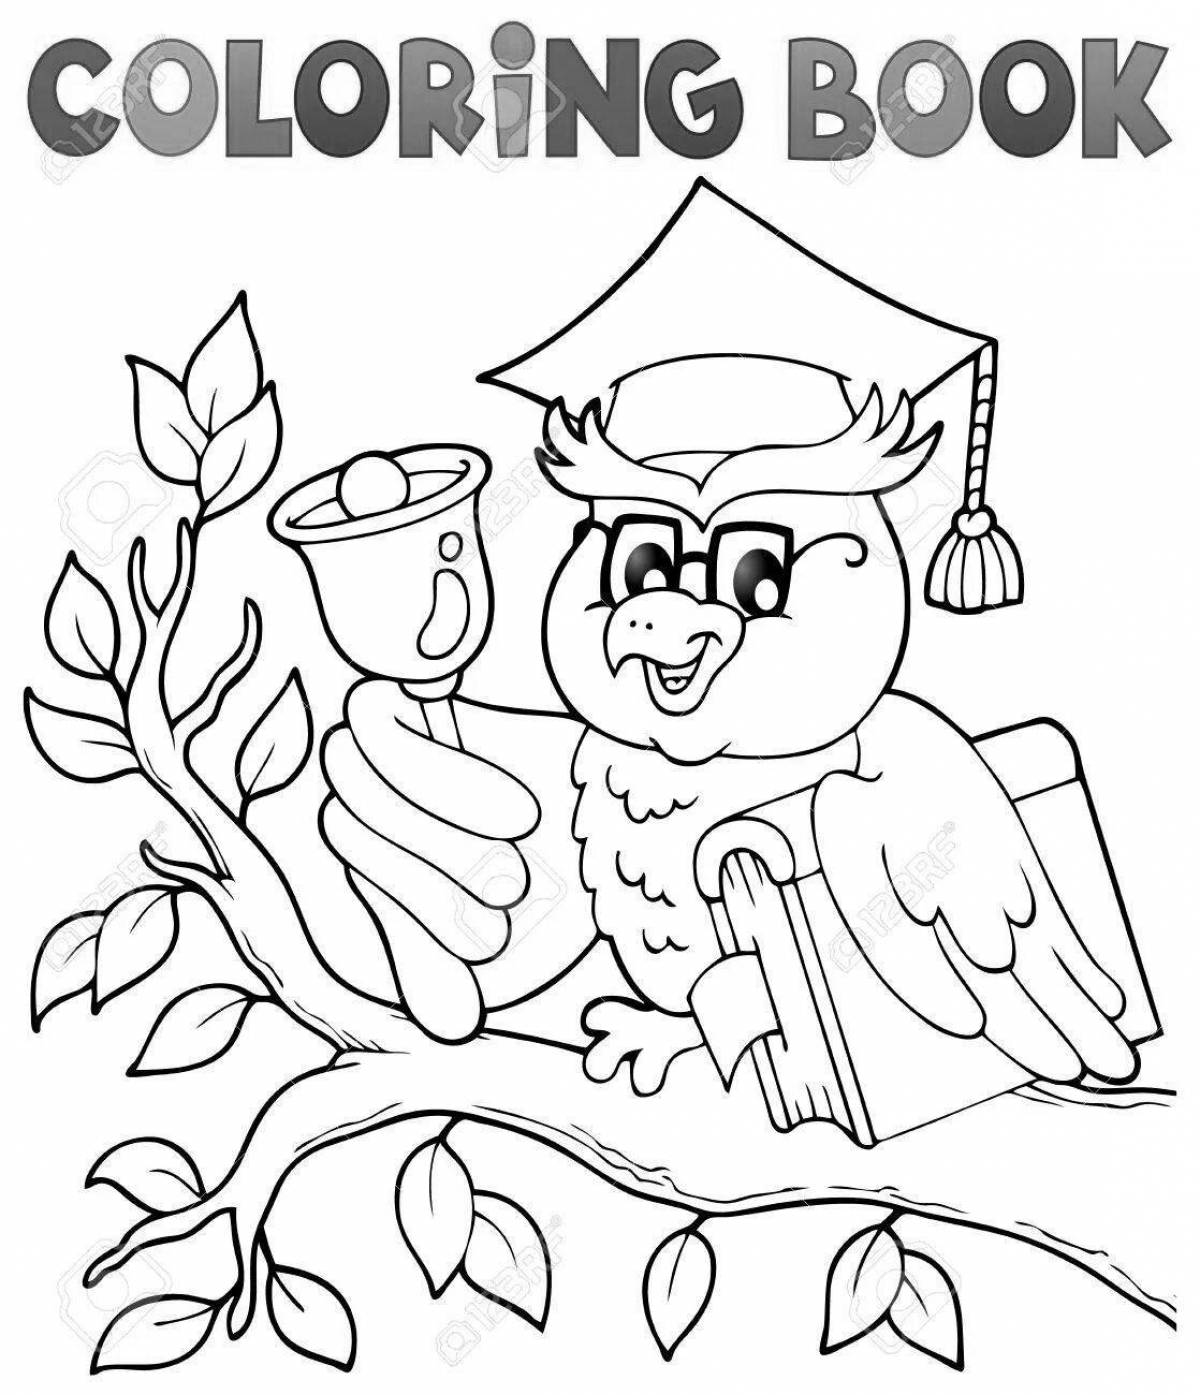 Scenic scientific owl coloring book